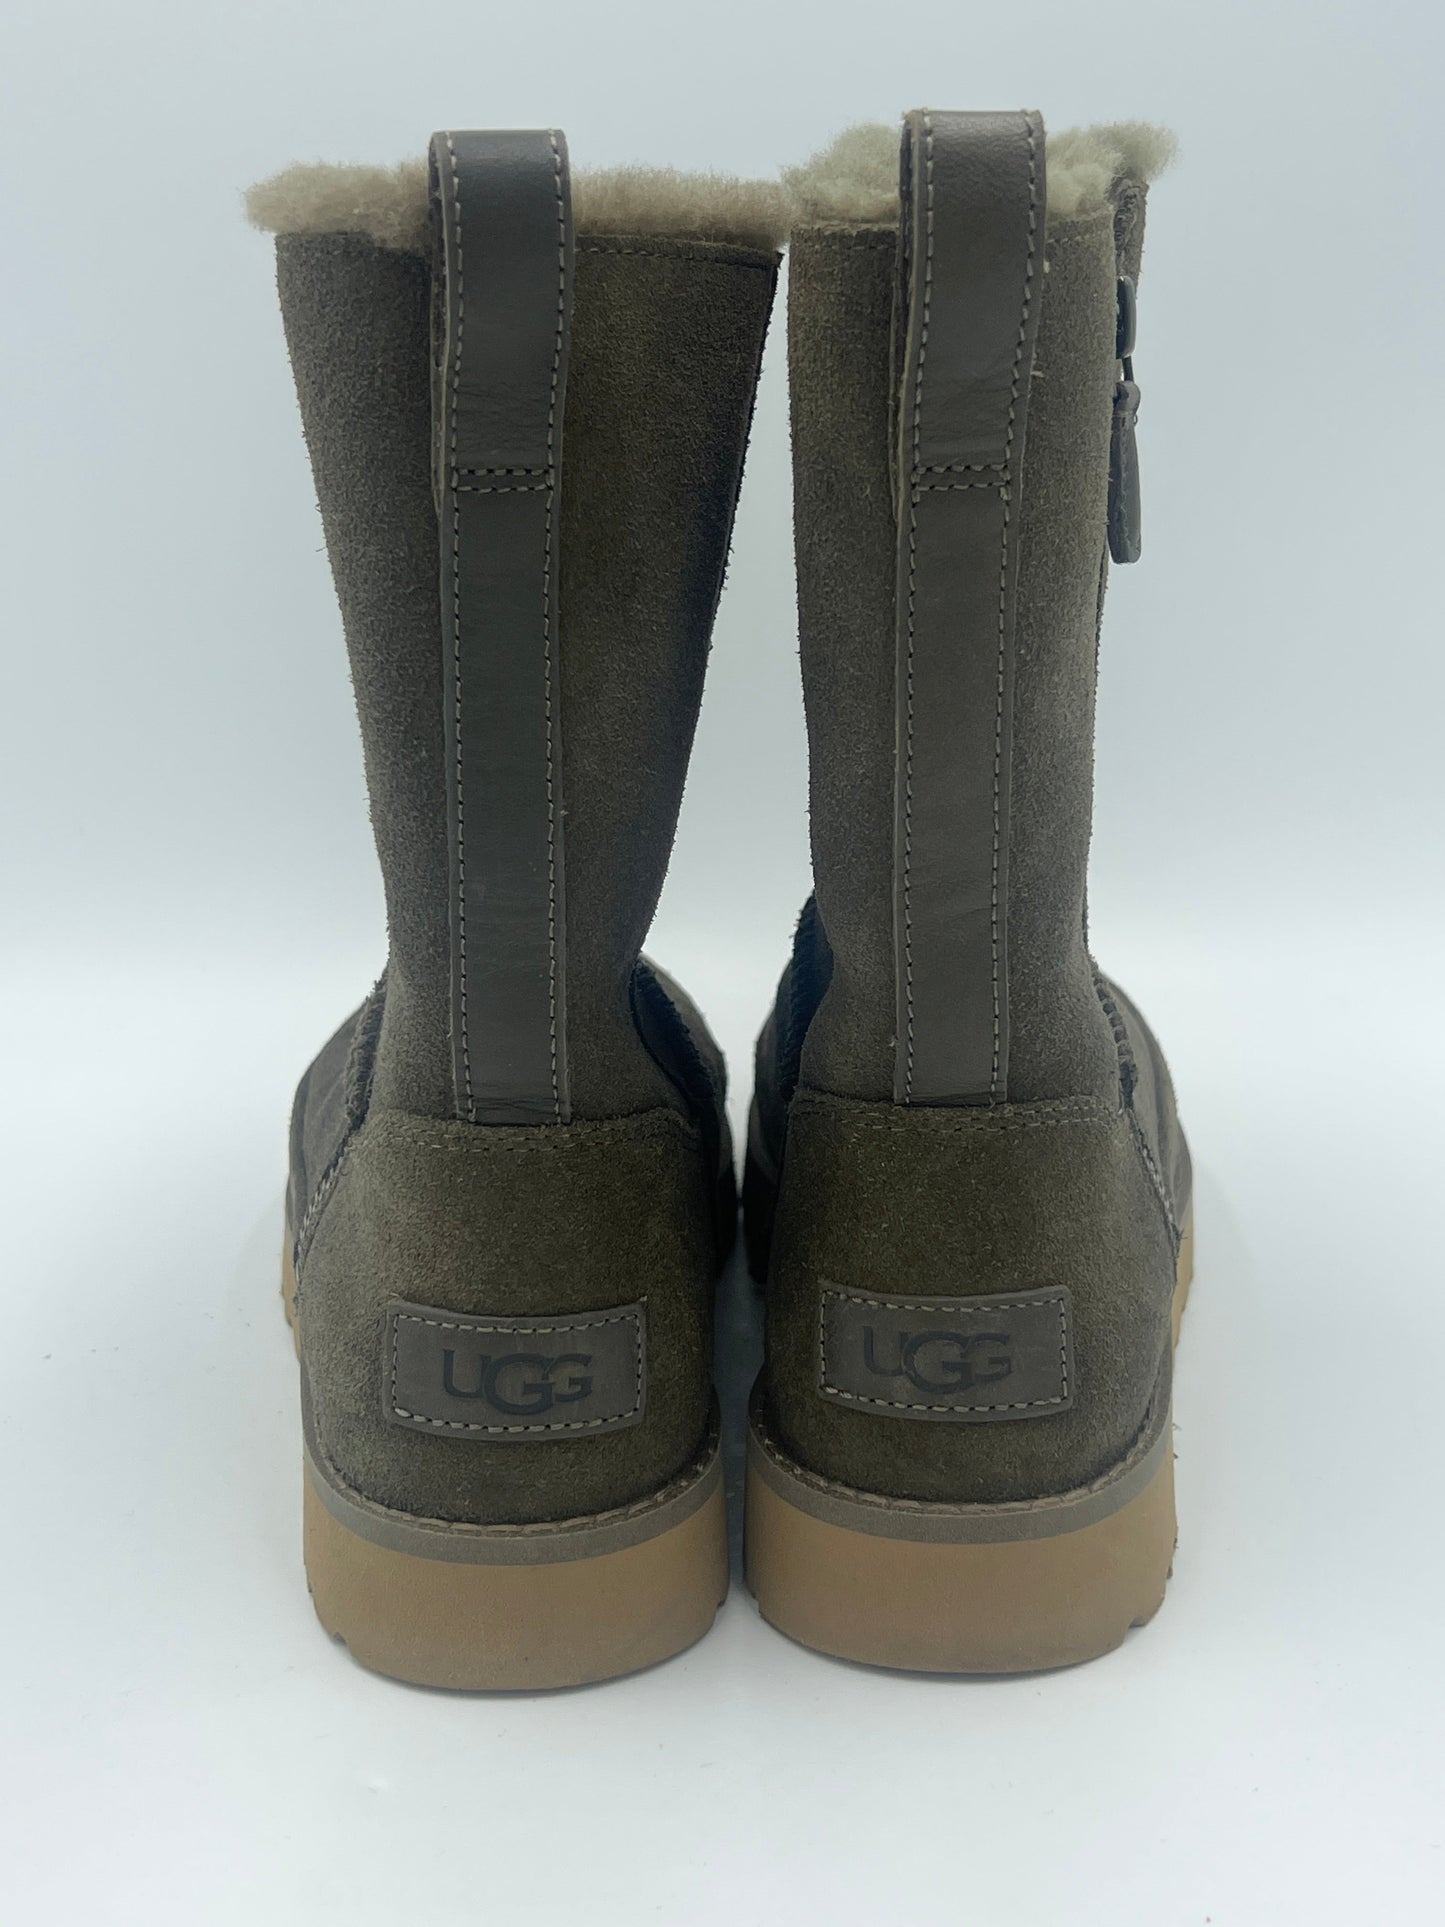 Boots Designer By UGG  Size: 5